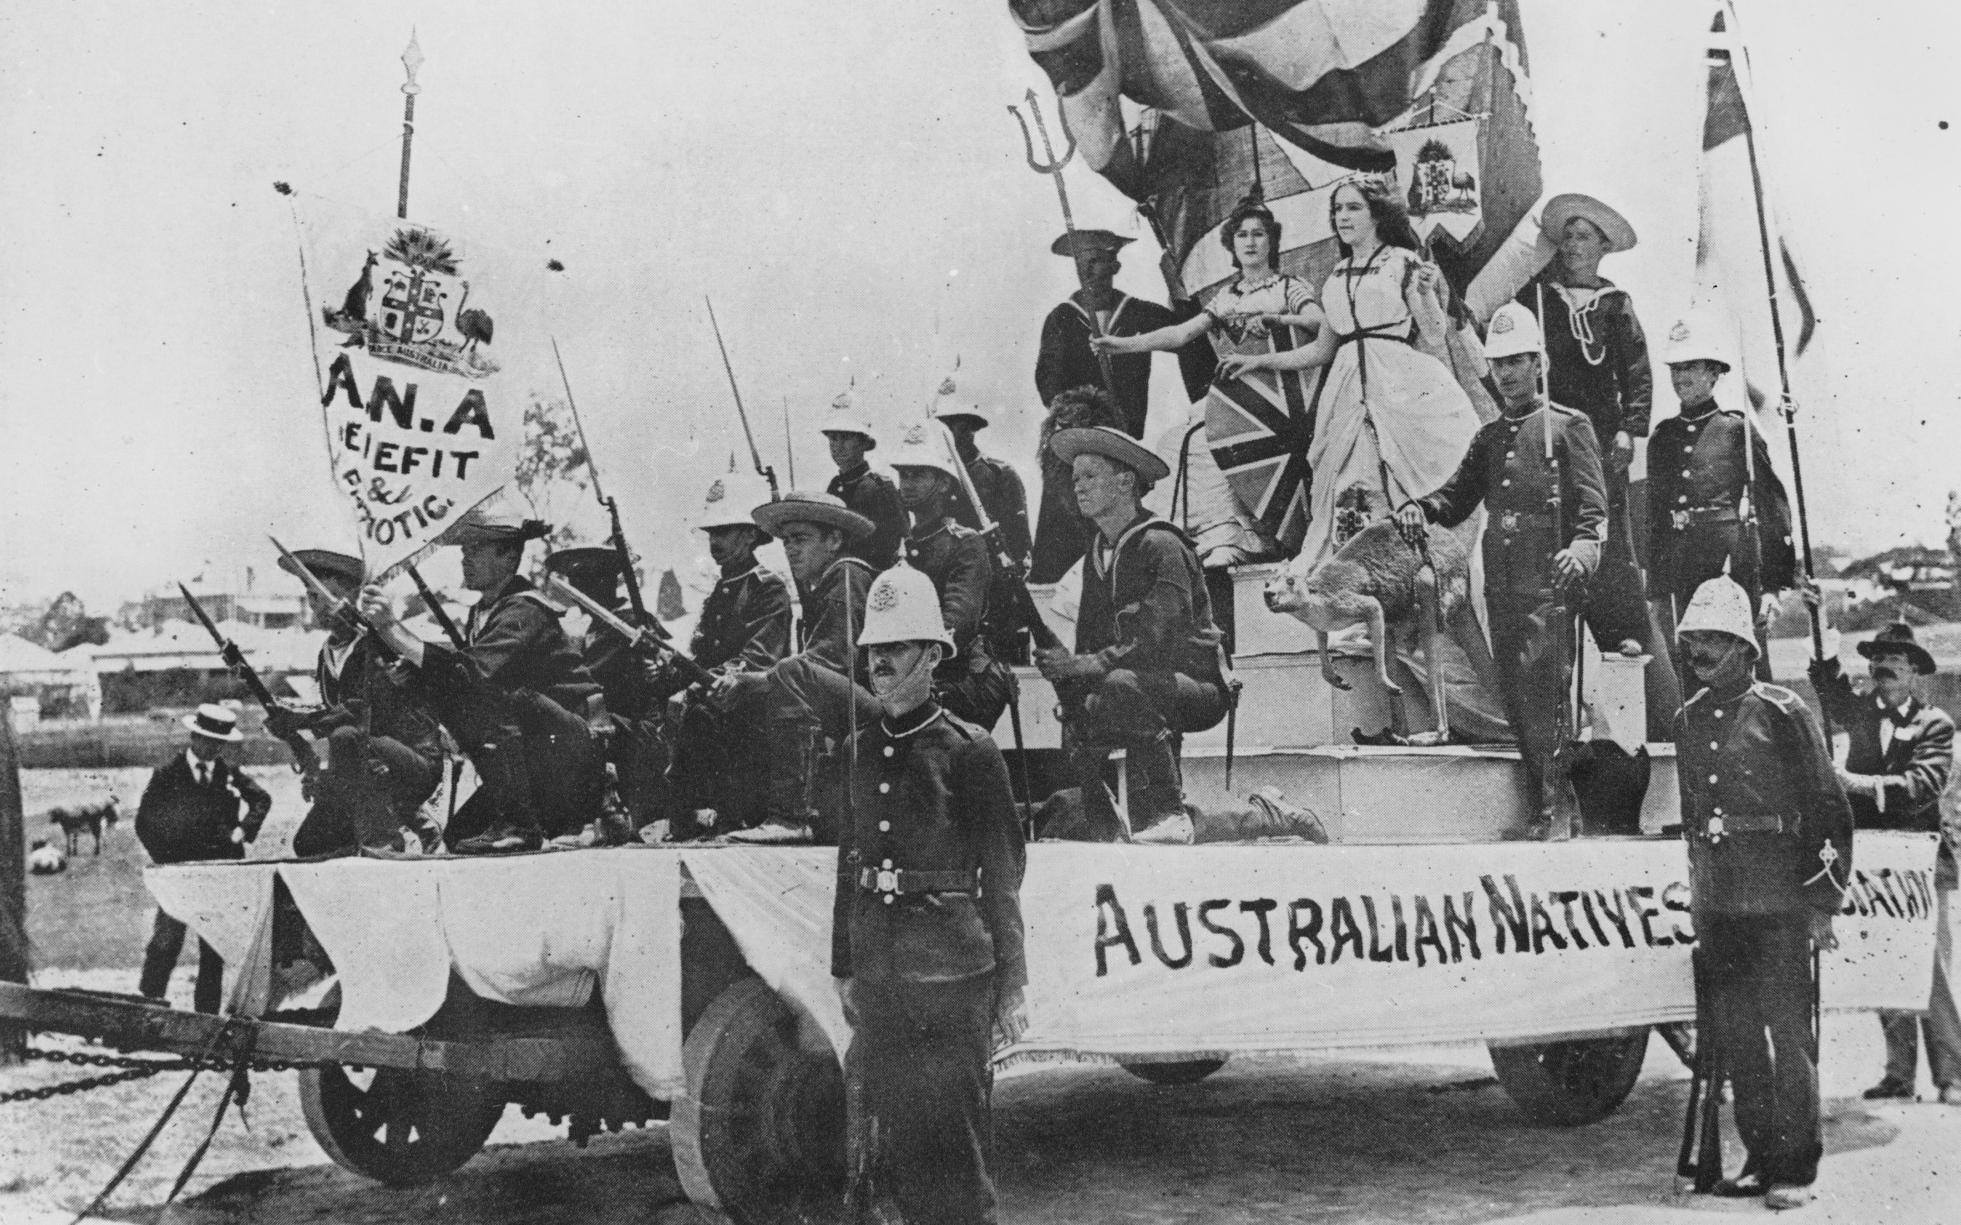 Australian Natives’ Association float participating in Australian Commonwealth celebrations, Brisbane, 1901.